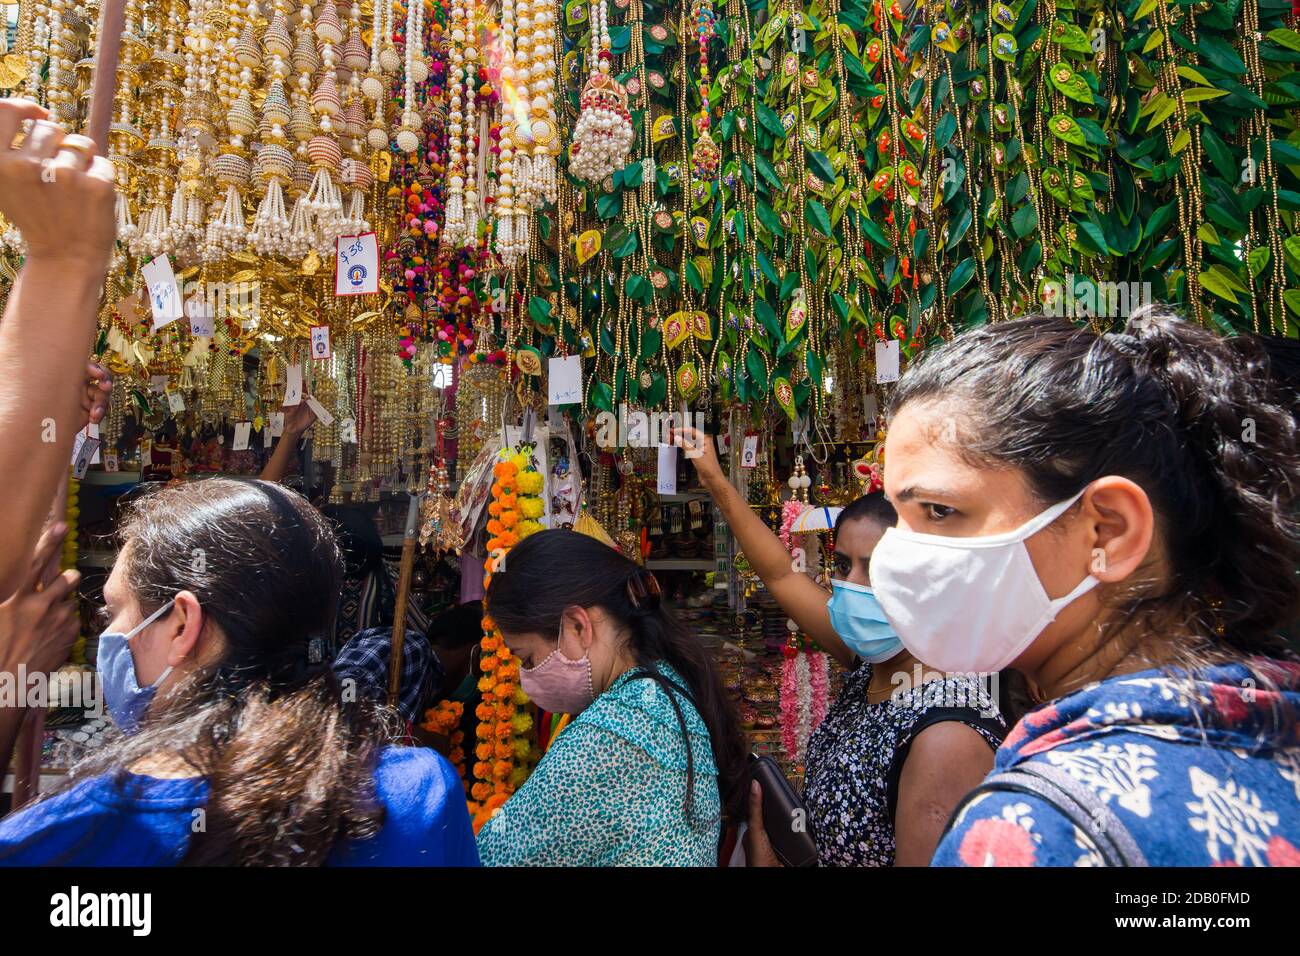 Street scene of Indian women choosing decorative items hanging on top. Singapore. 2020 Stock Photo